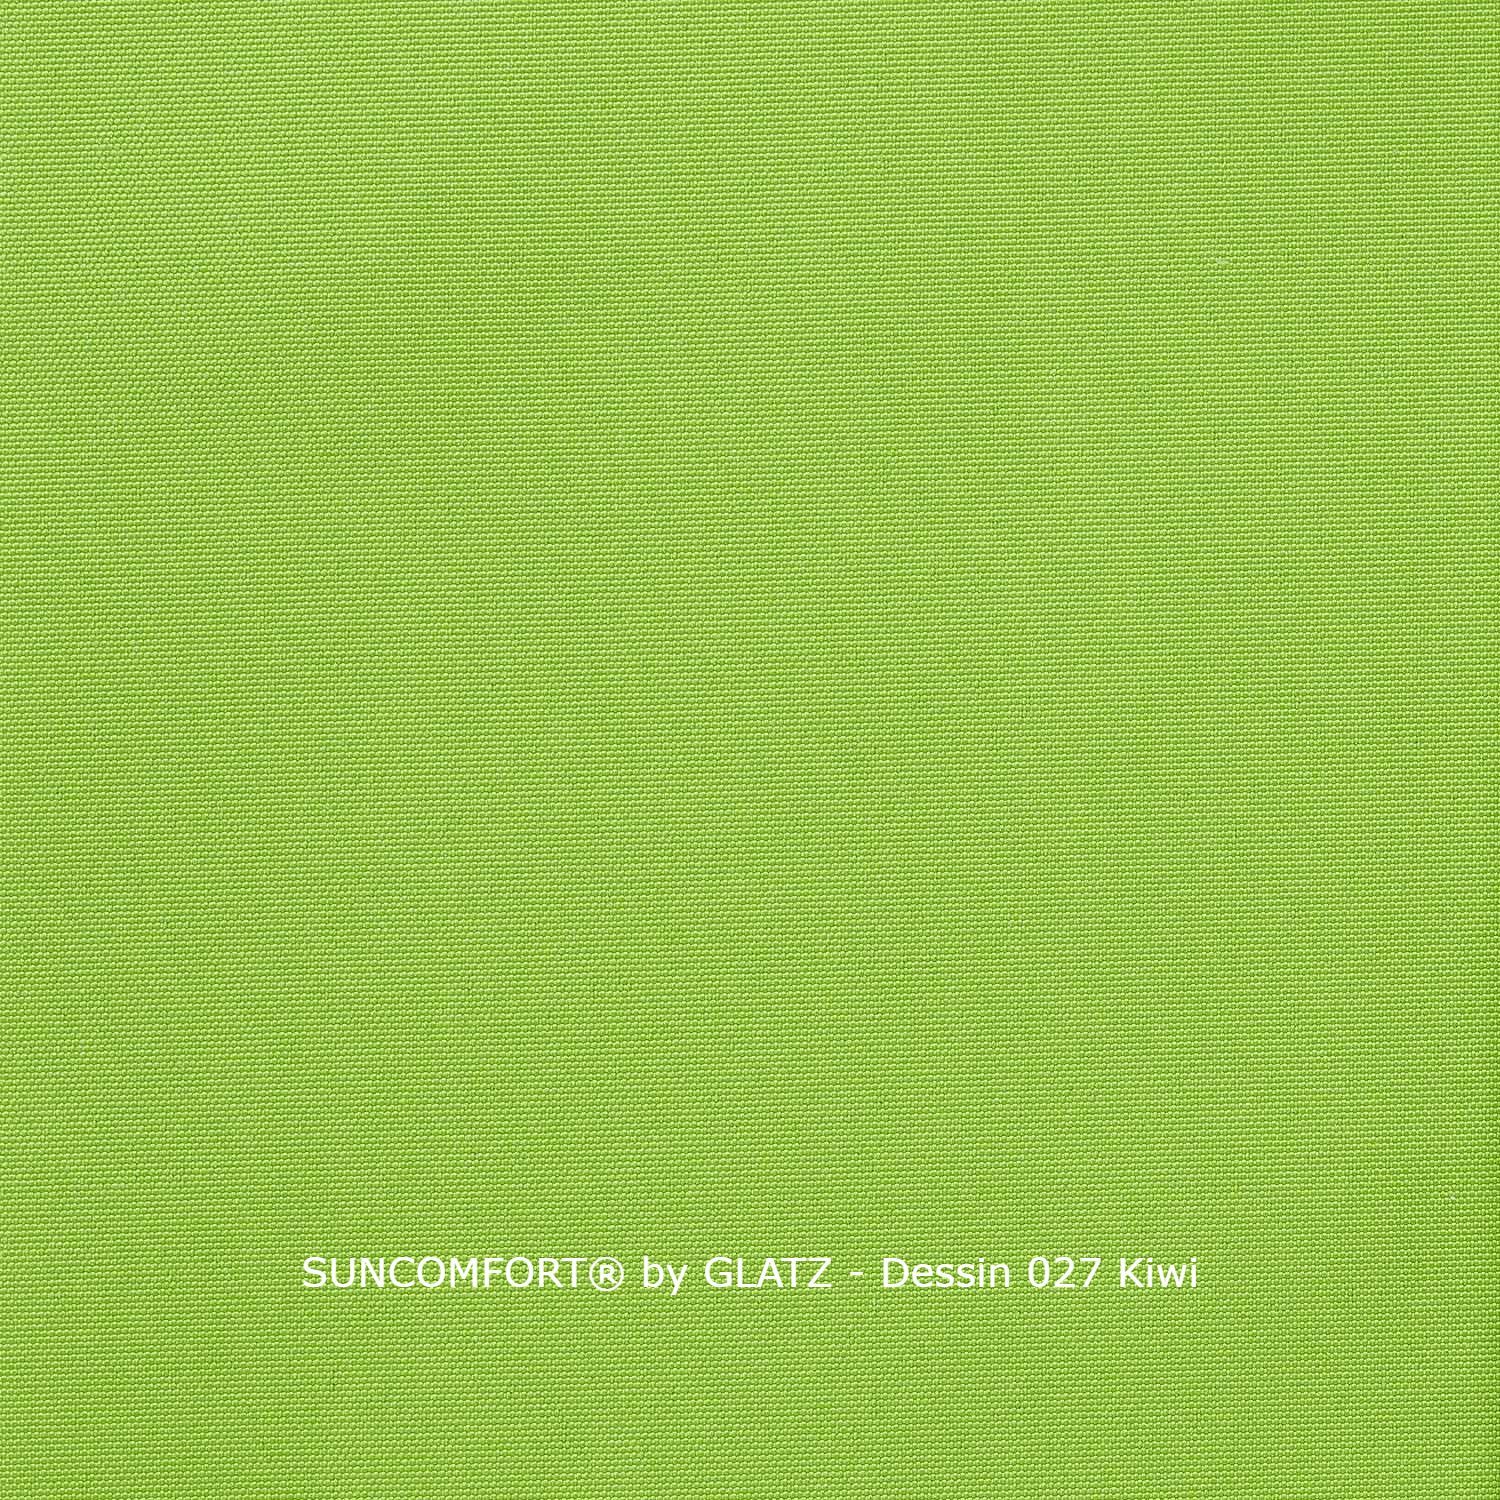 SUNCOMFORT® by GLATZ Stoffmuster Dessin 027 Kiwi